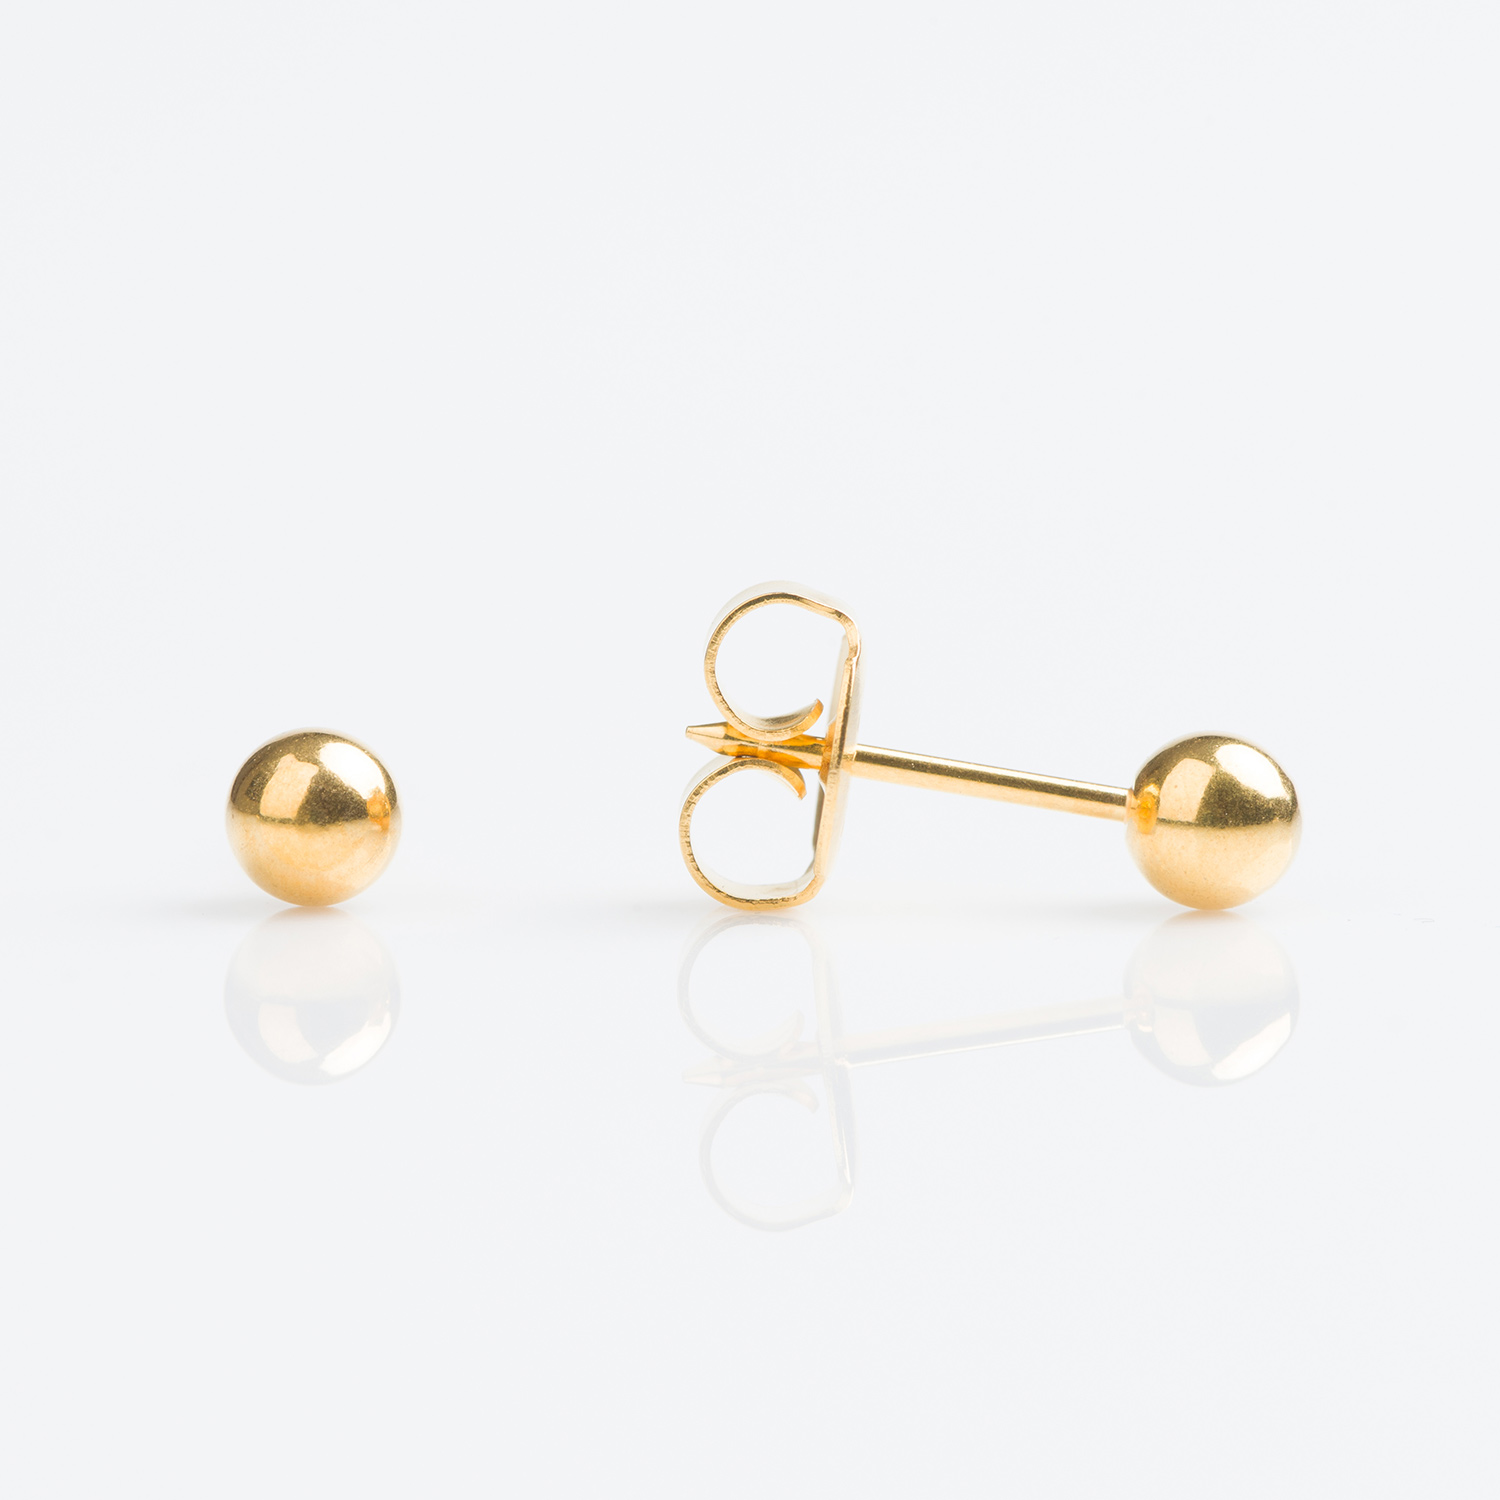 TT-622 – Tiny Tips Gold Plated 4mm Ball Stud Earring